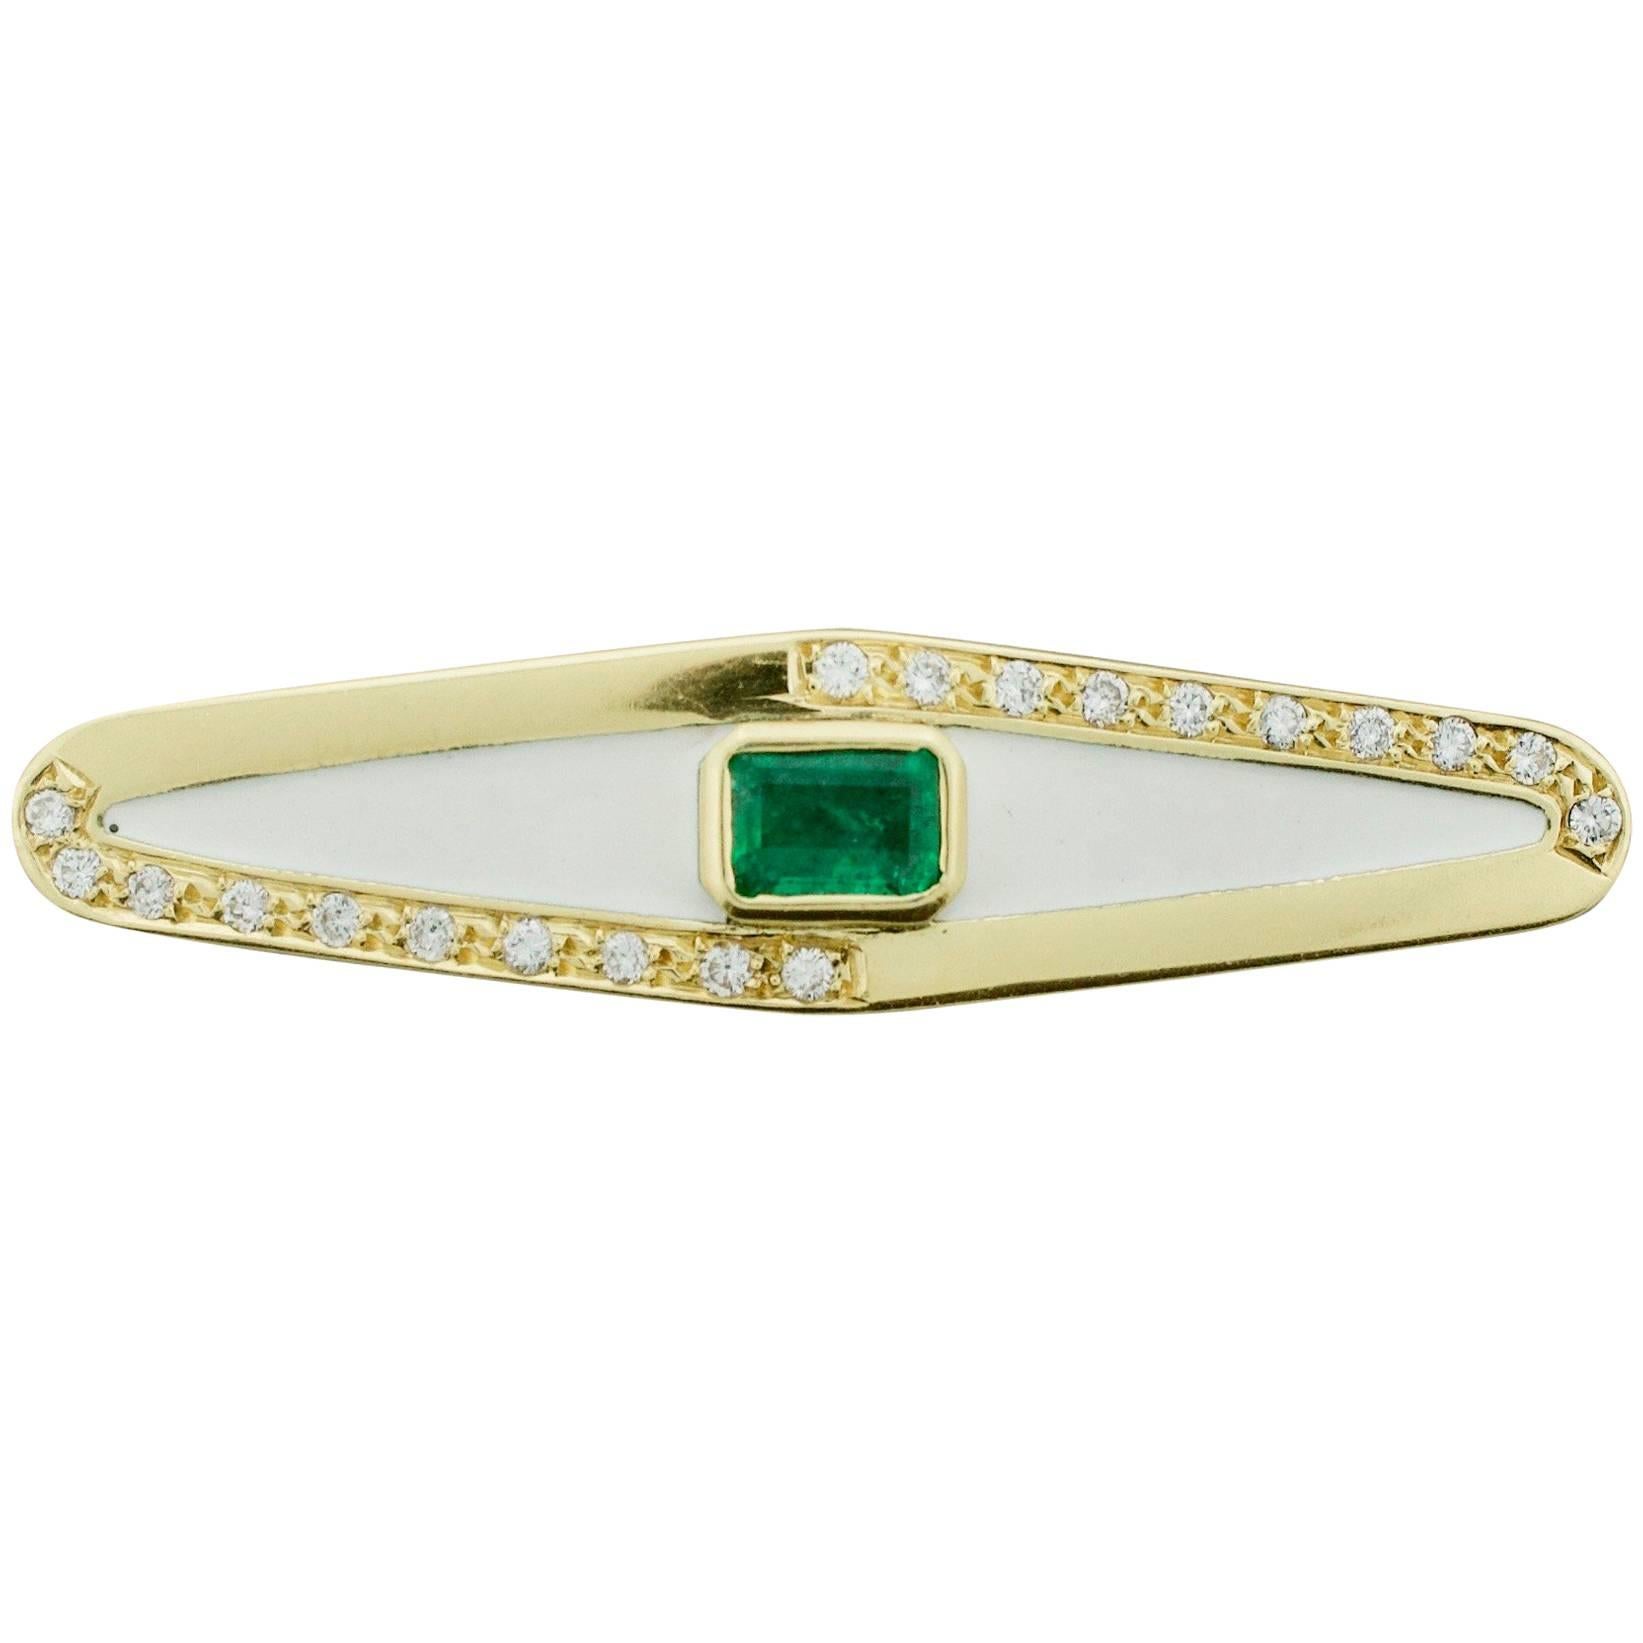 Emerald Diamond and Enamel Modern Brooch "Lovari"